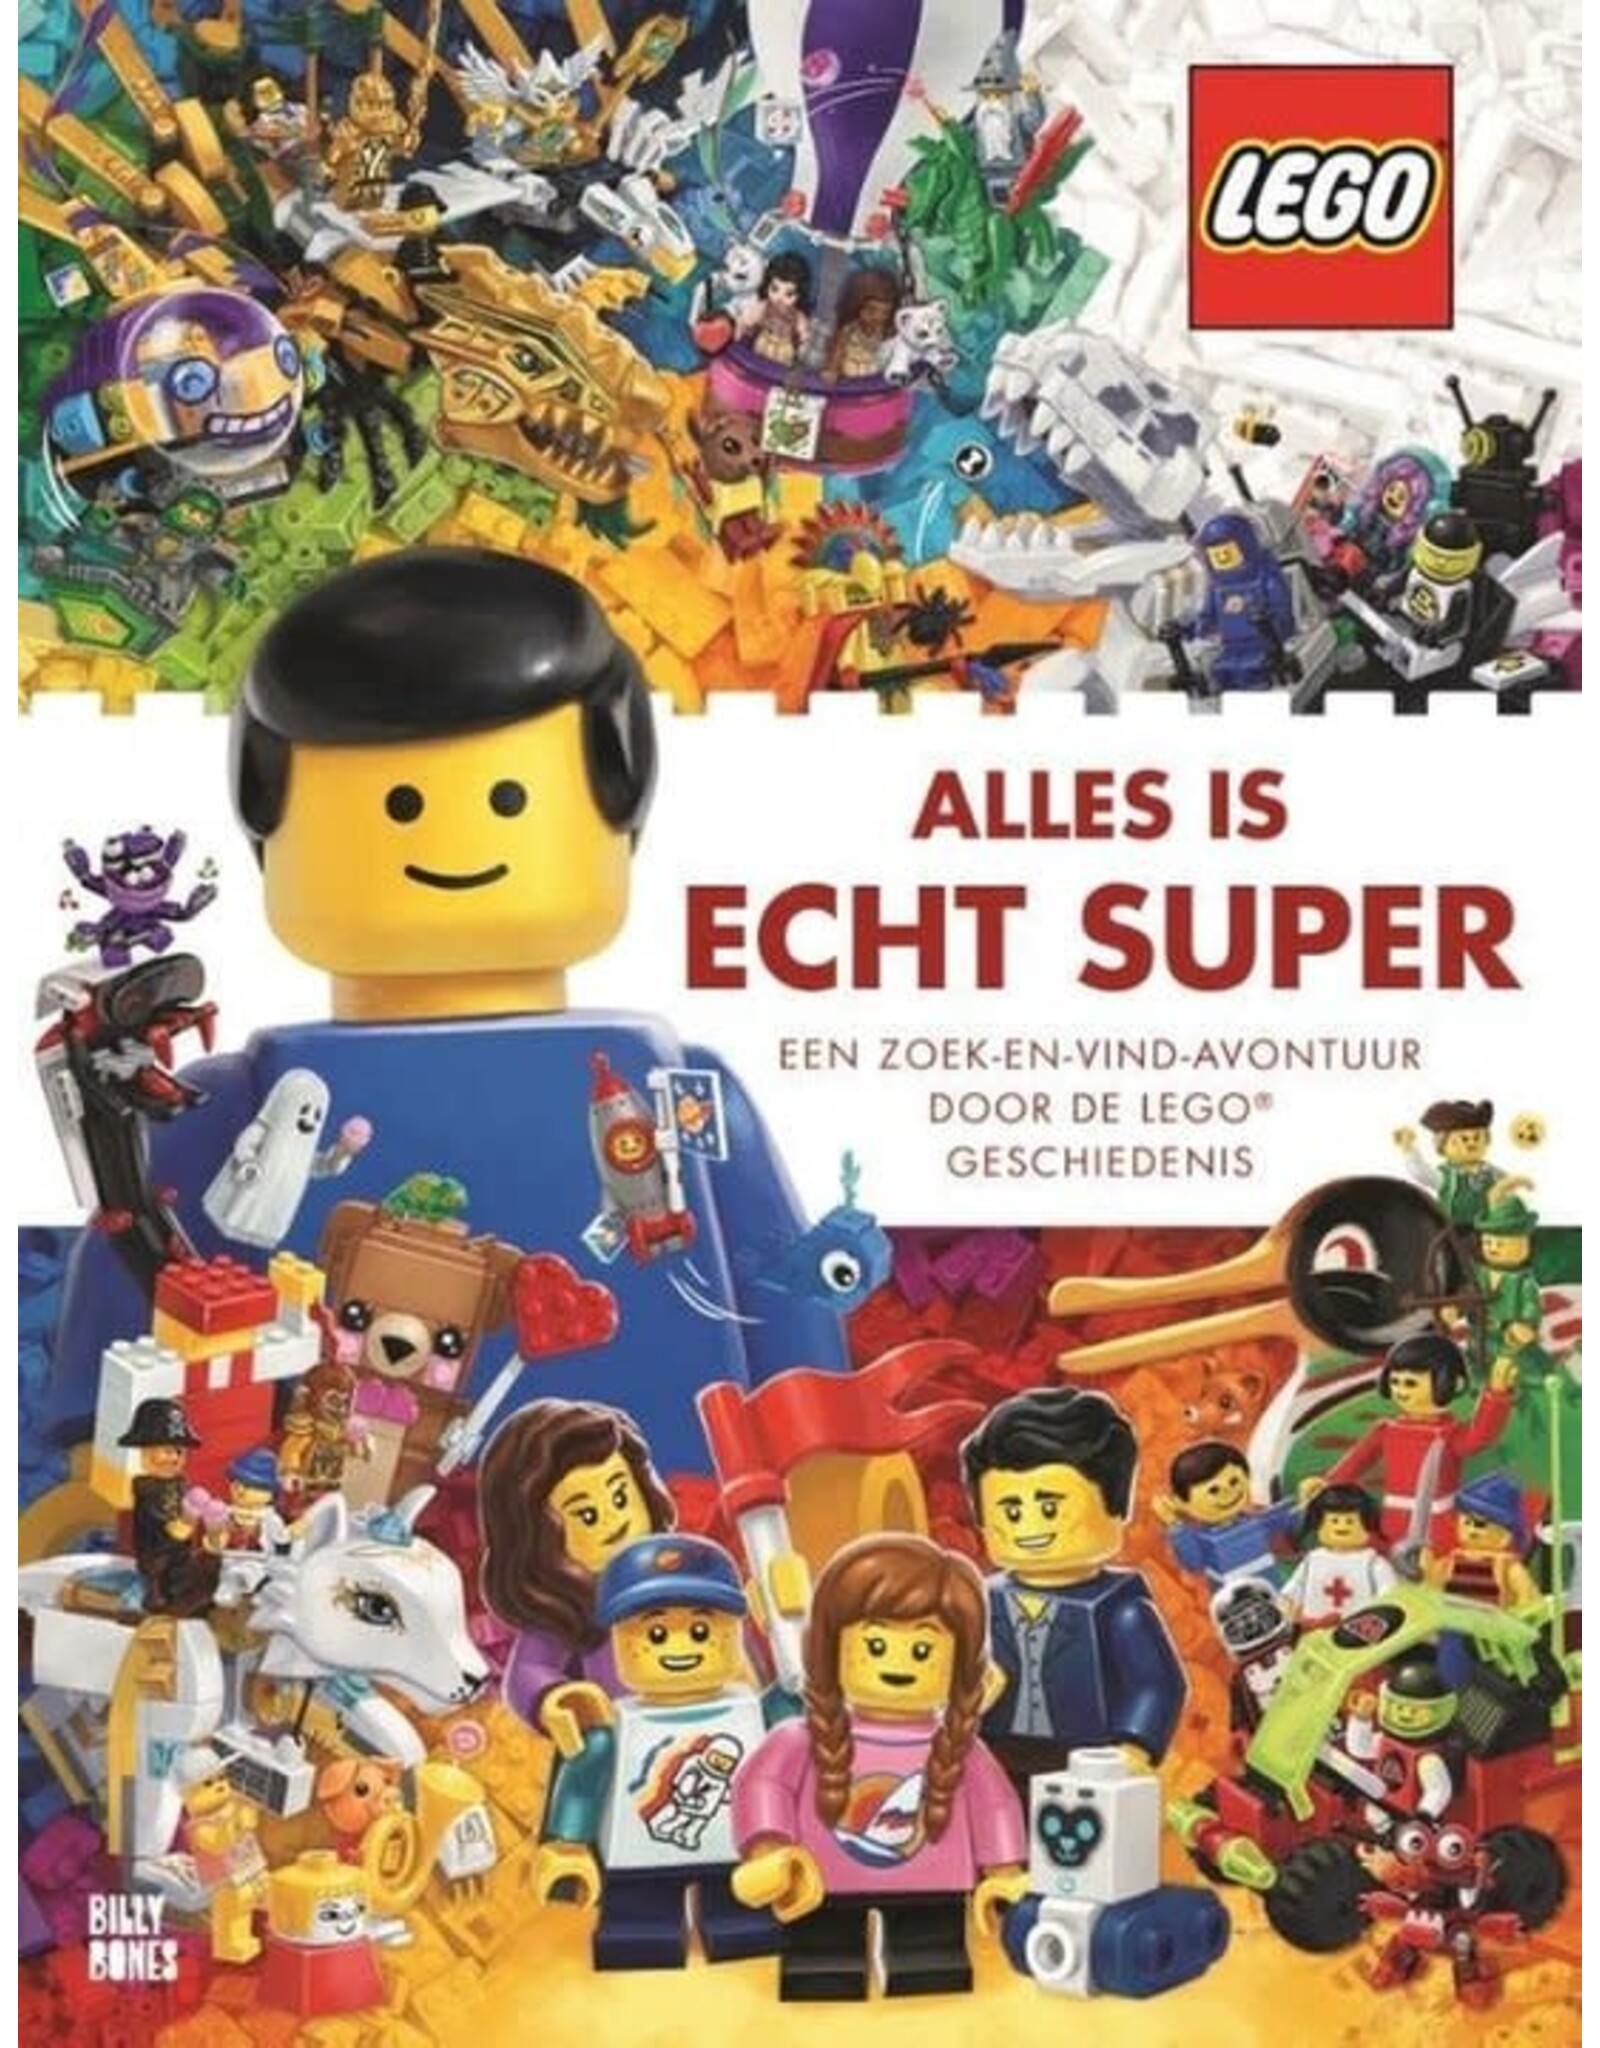 LEGO - Alles is echt super